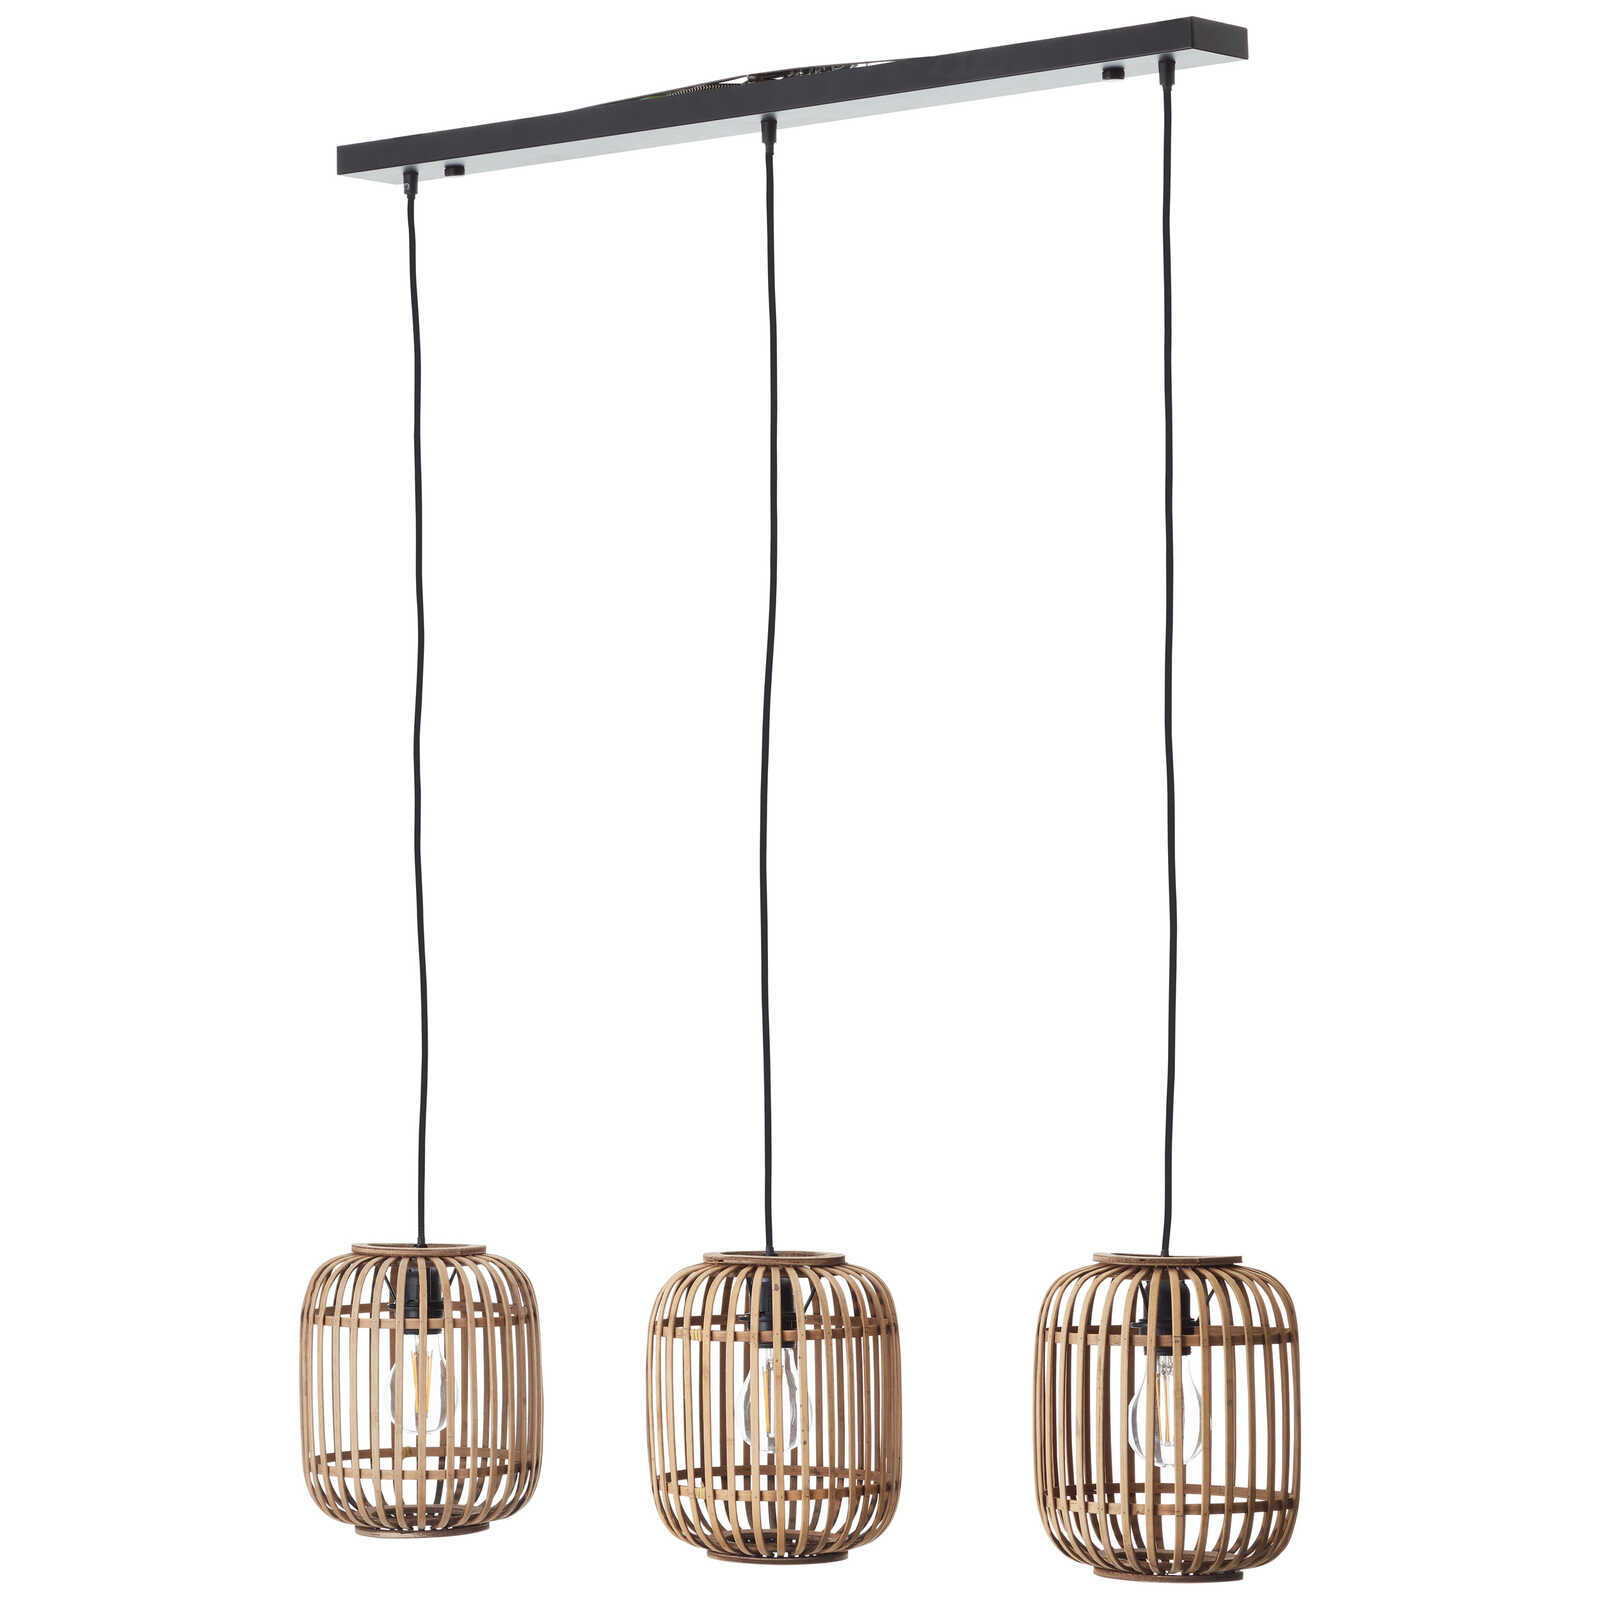             Bamboe hanglamp - Willi 12 - Bruin
        